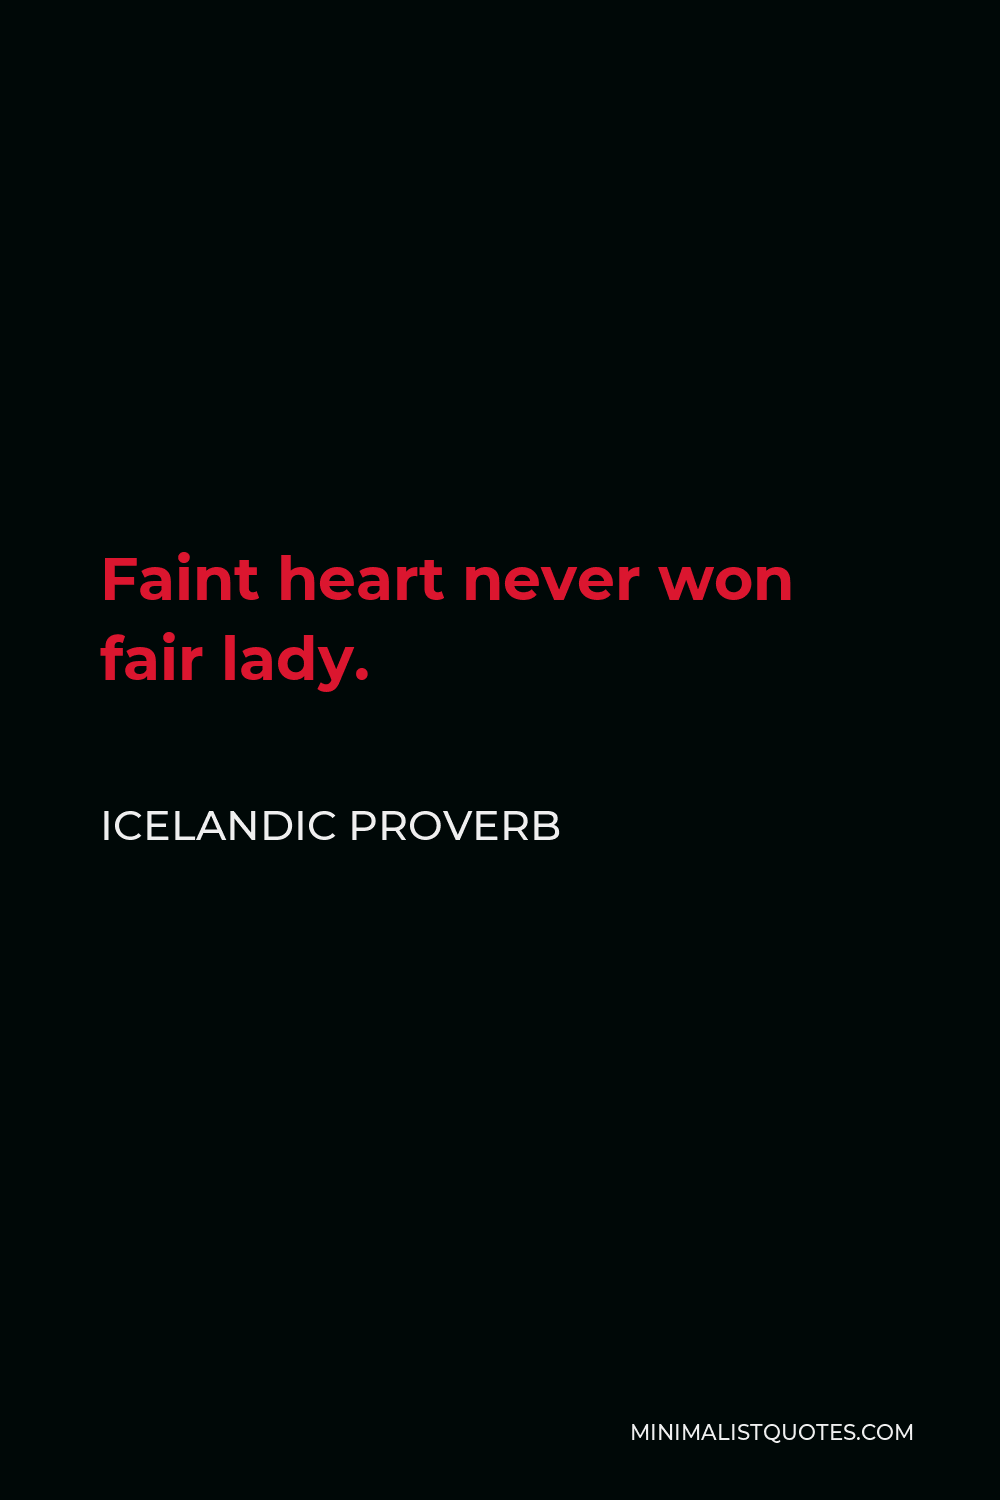 Icelandic Proverb Quote - Faint heart never won fair lady.